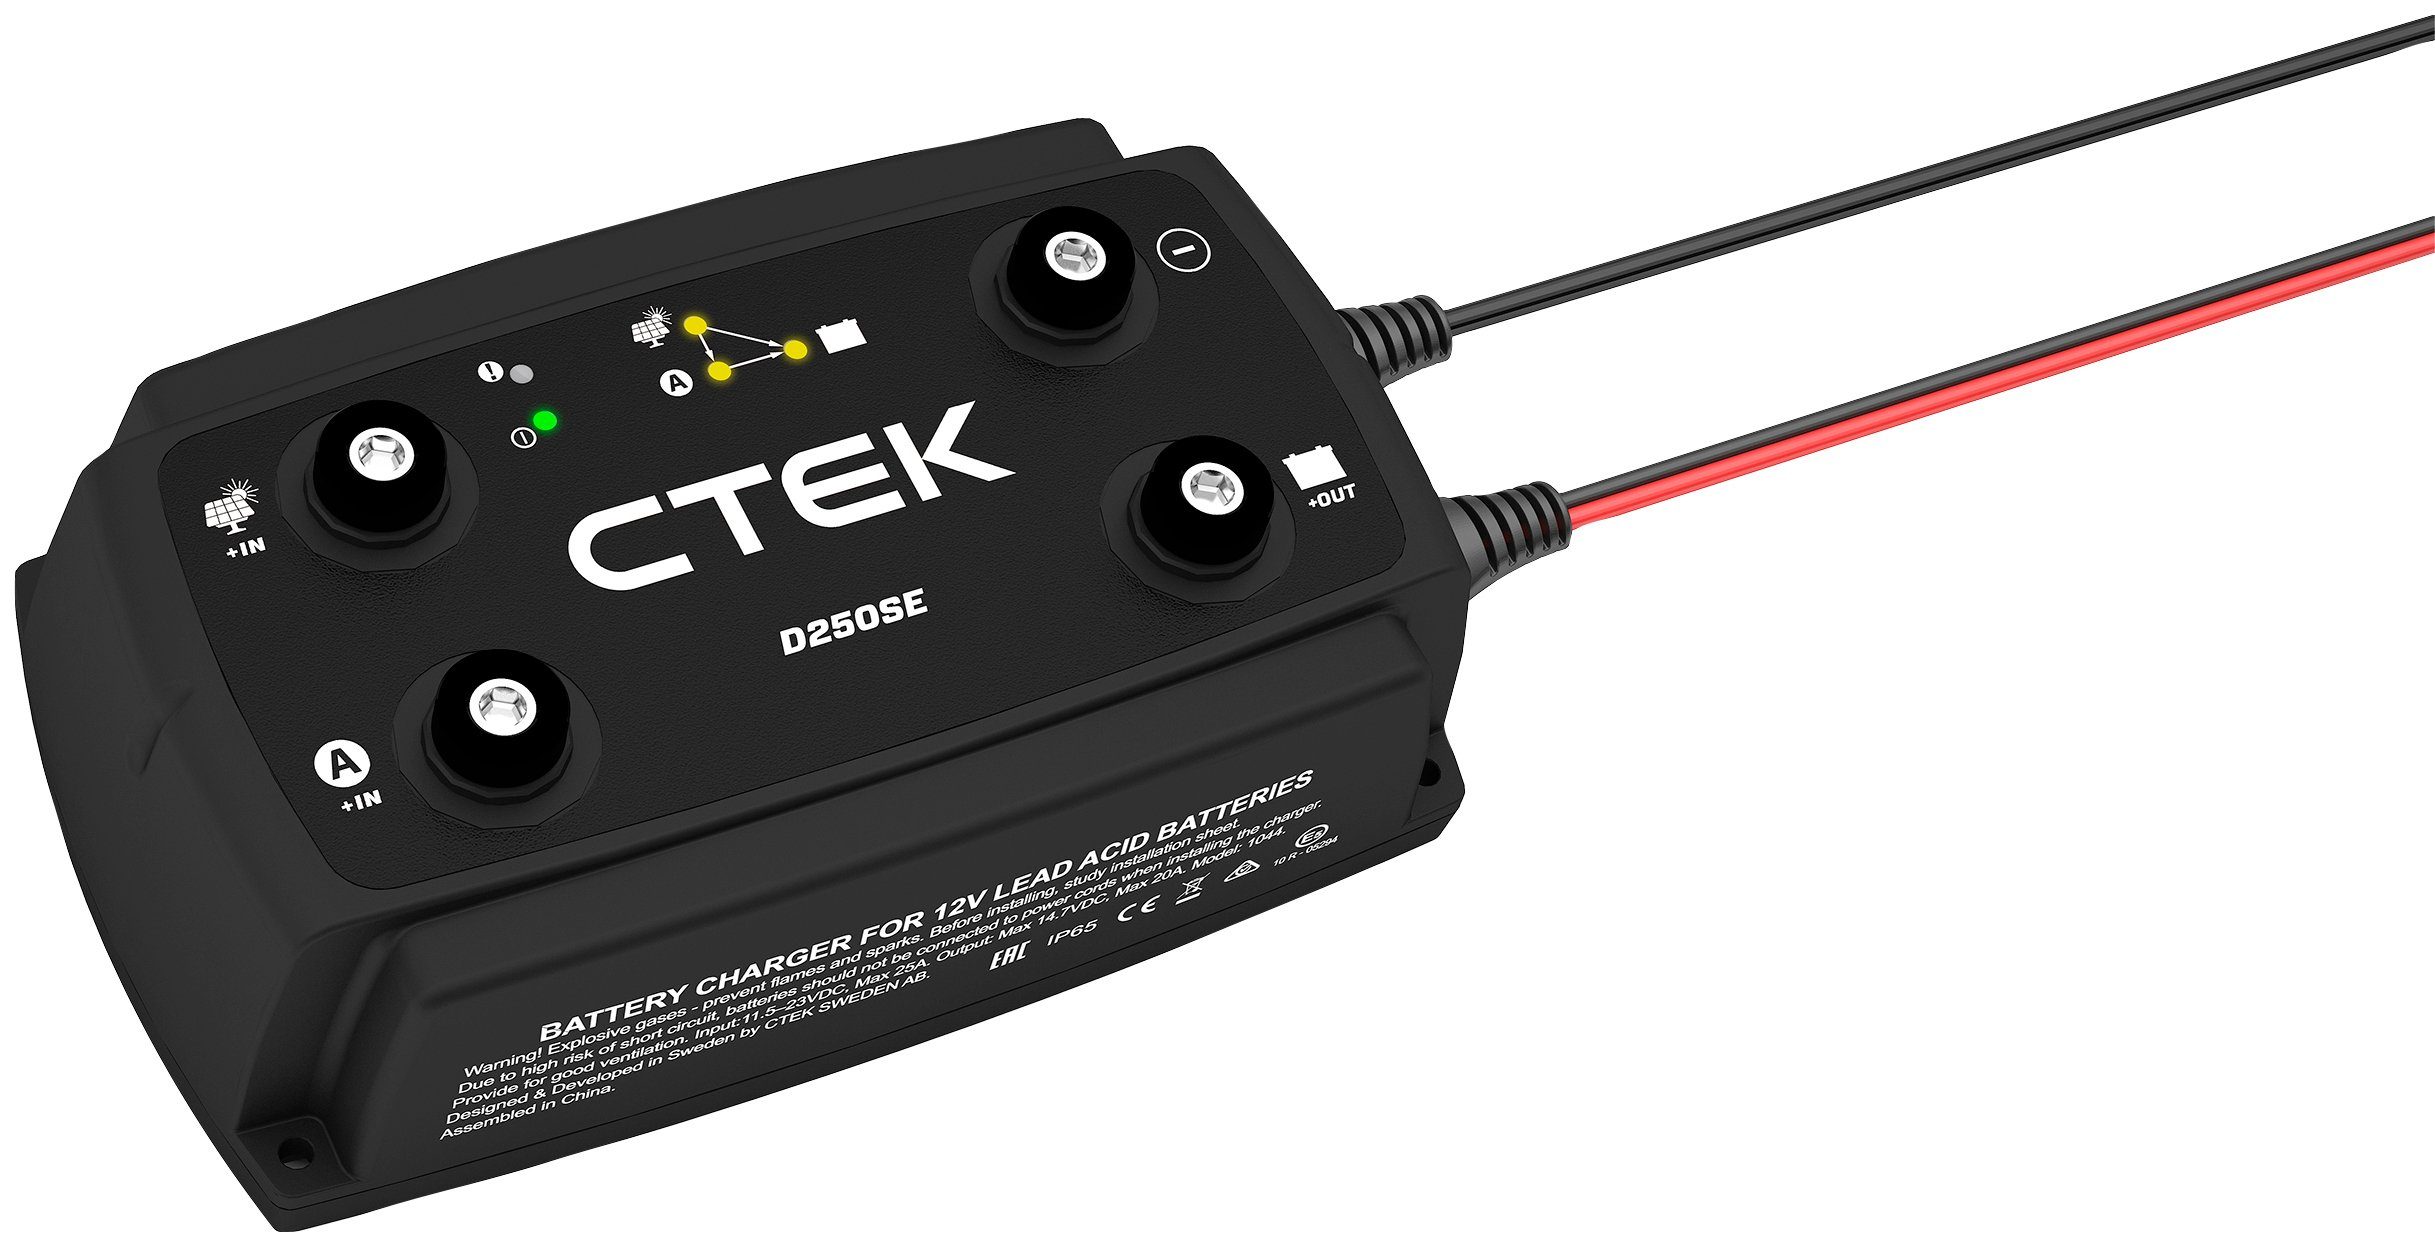 CTEK D250SE Batterie-Ladegerät (Temperatursensor zur Optimierung des Ladevorgangs in kalten Umgebungen)